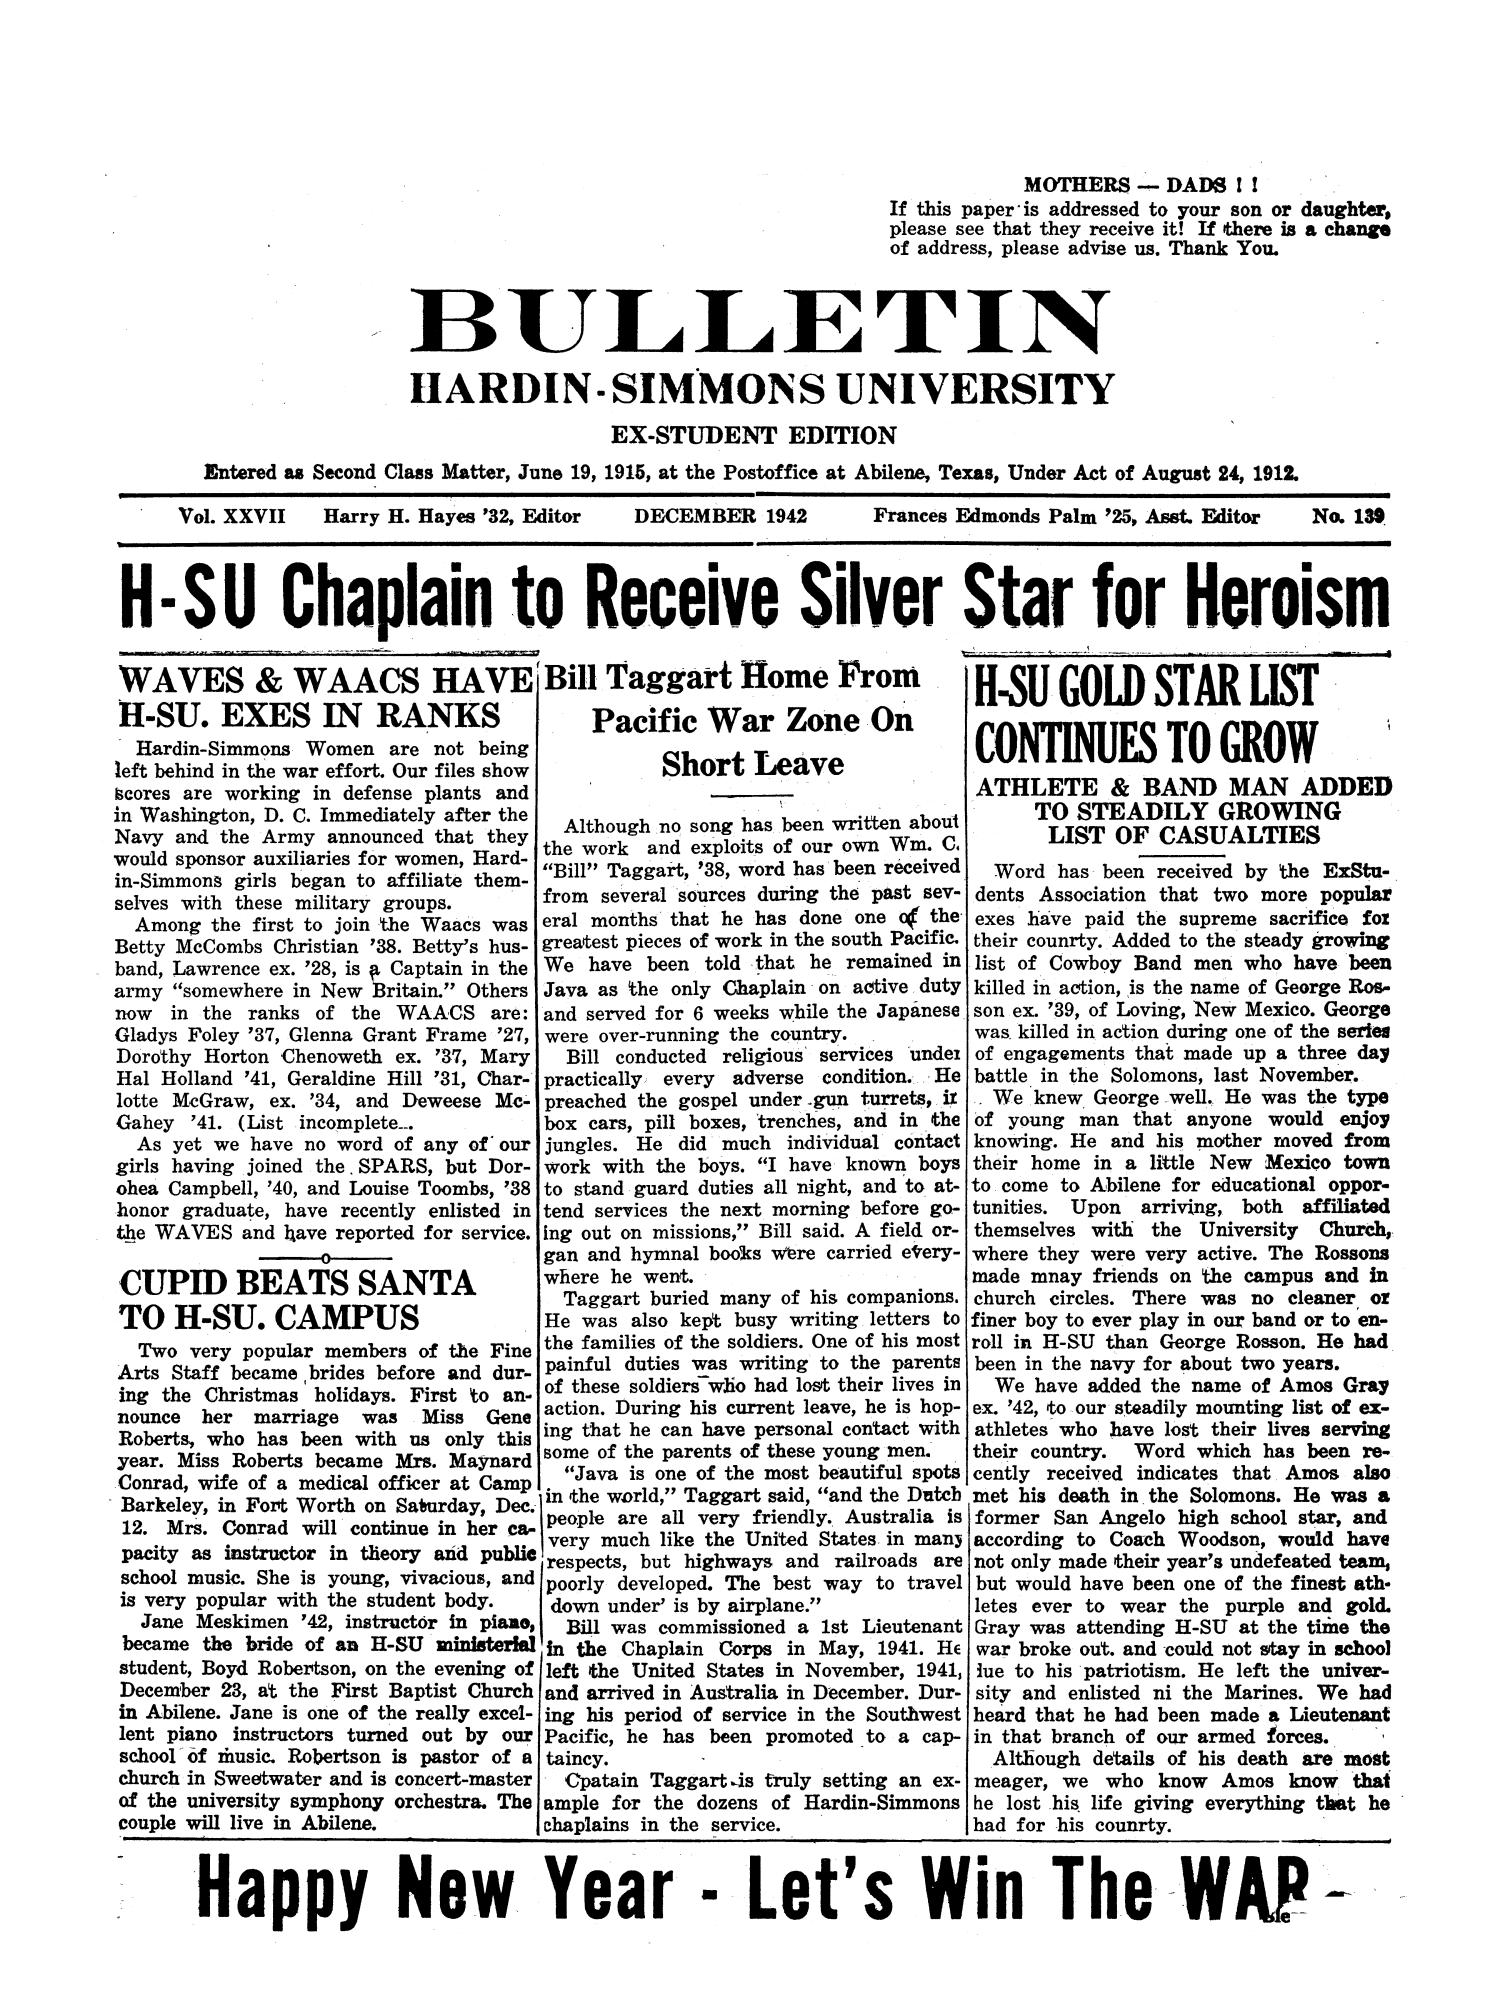 Bulletin: Hardin-Simmons University, Ex-Student Edition, December 1942
                                                
                                                    1
                                                